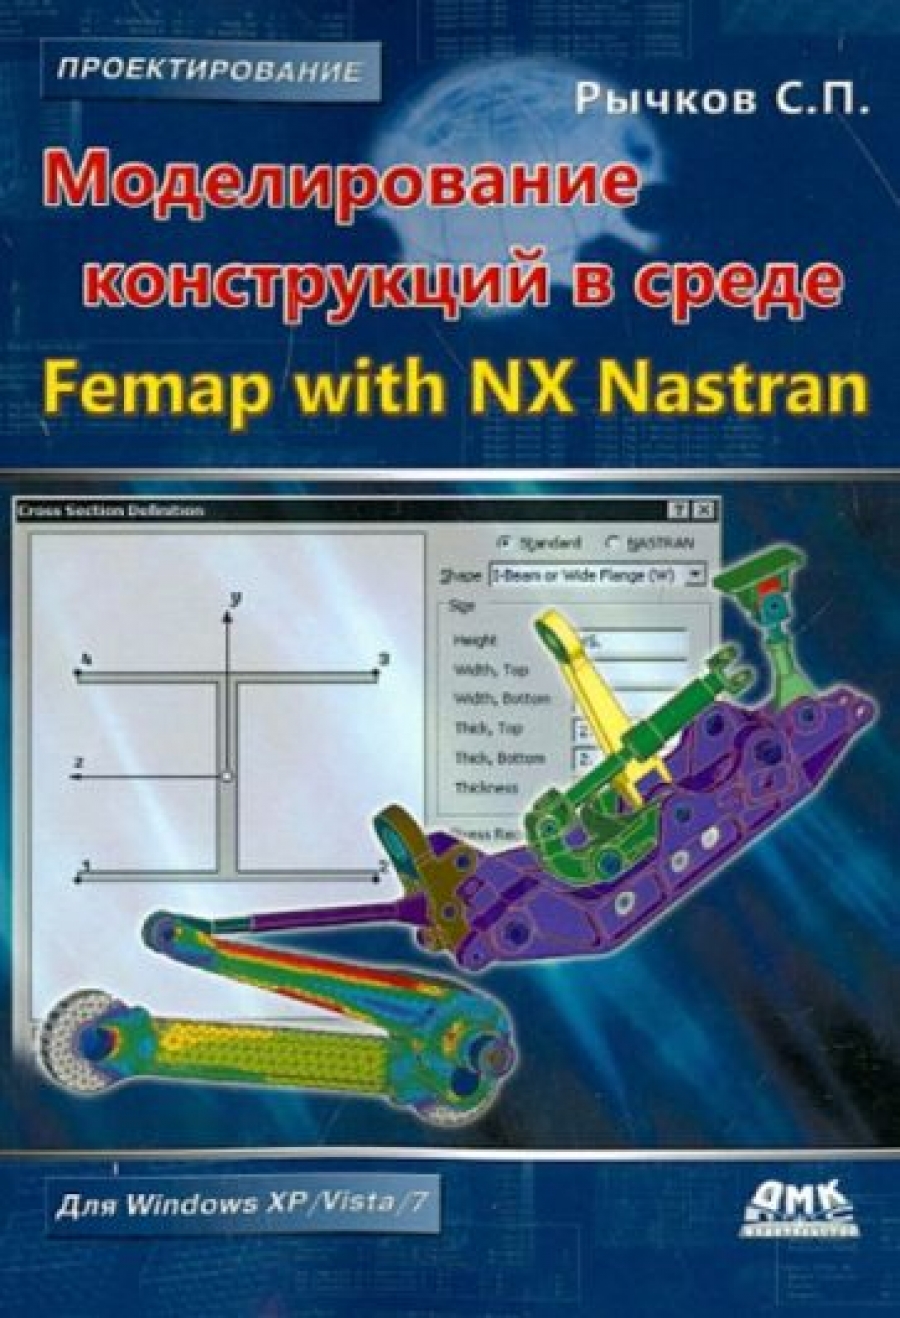  ..     Femap with NX Nastran 